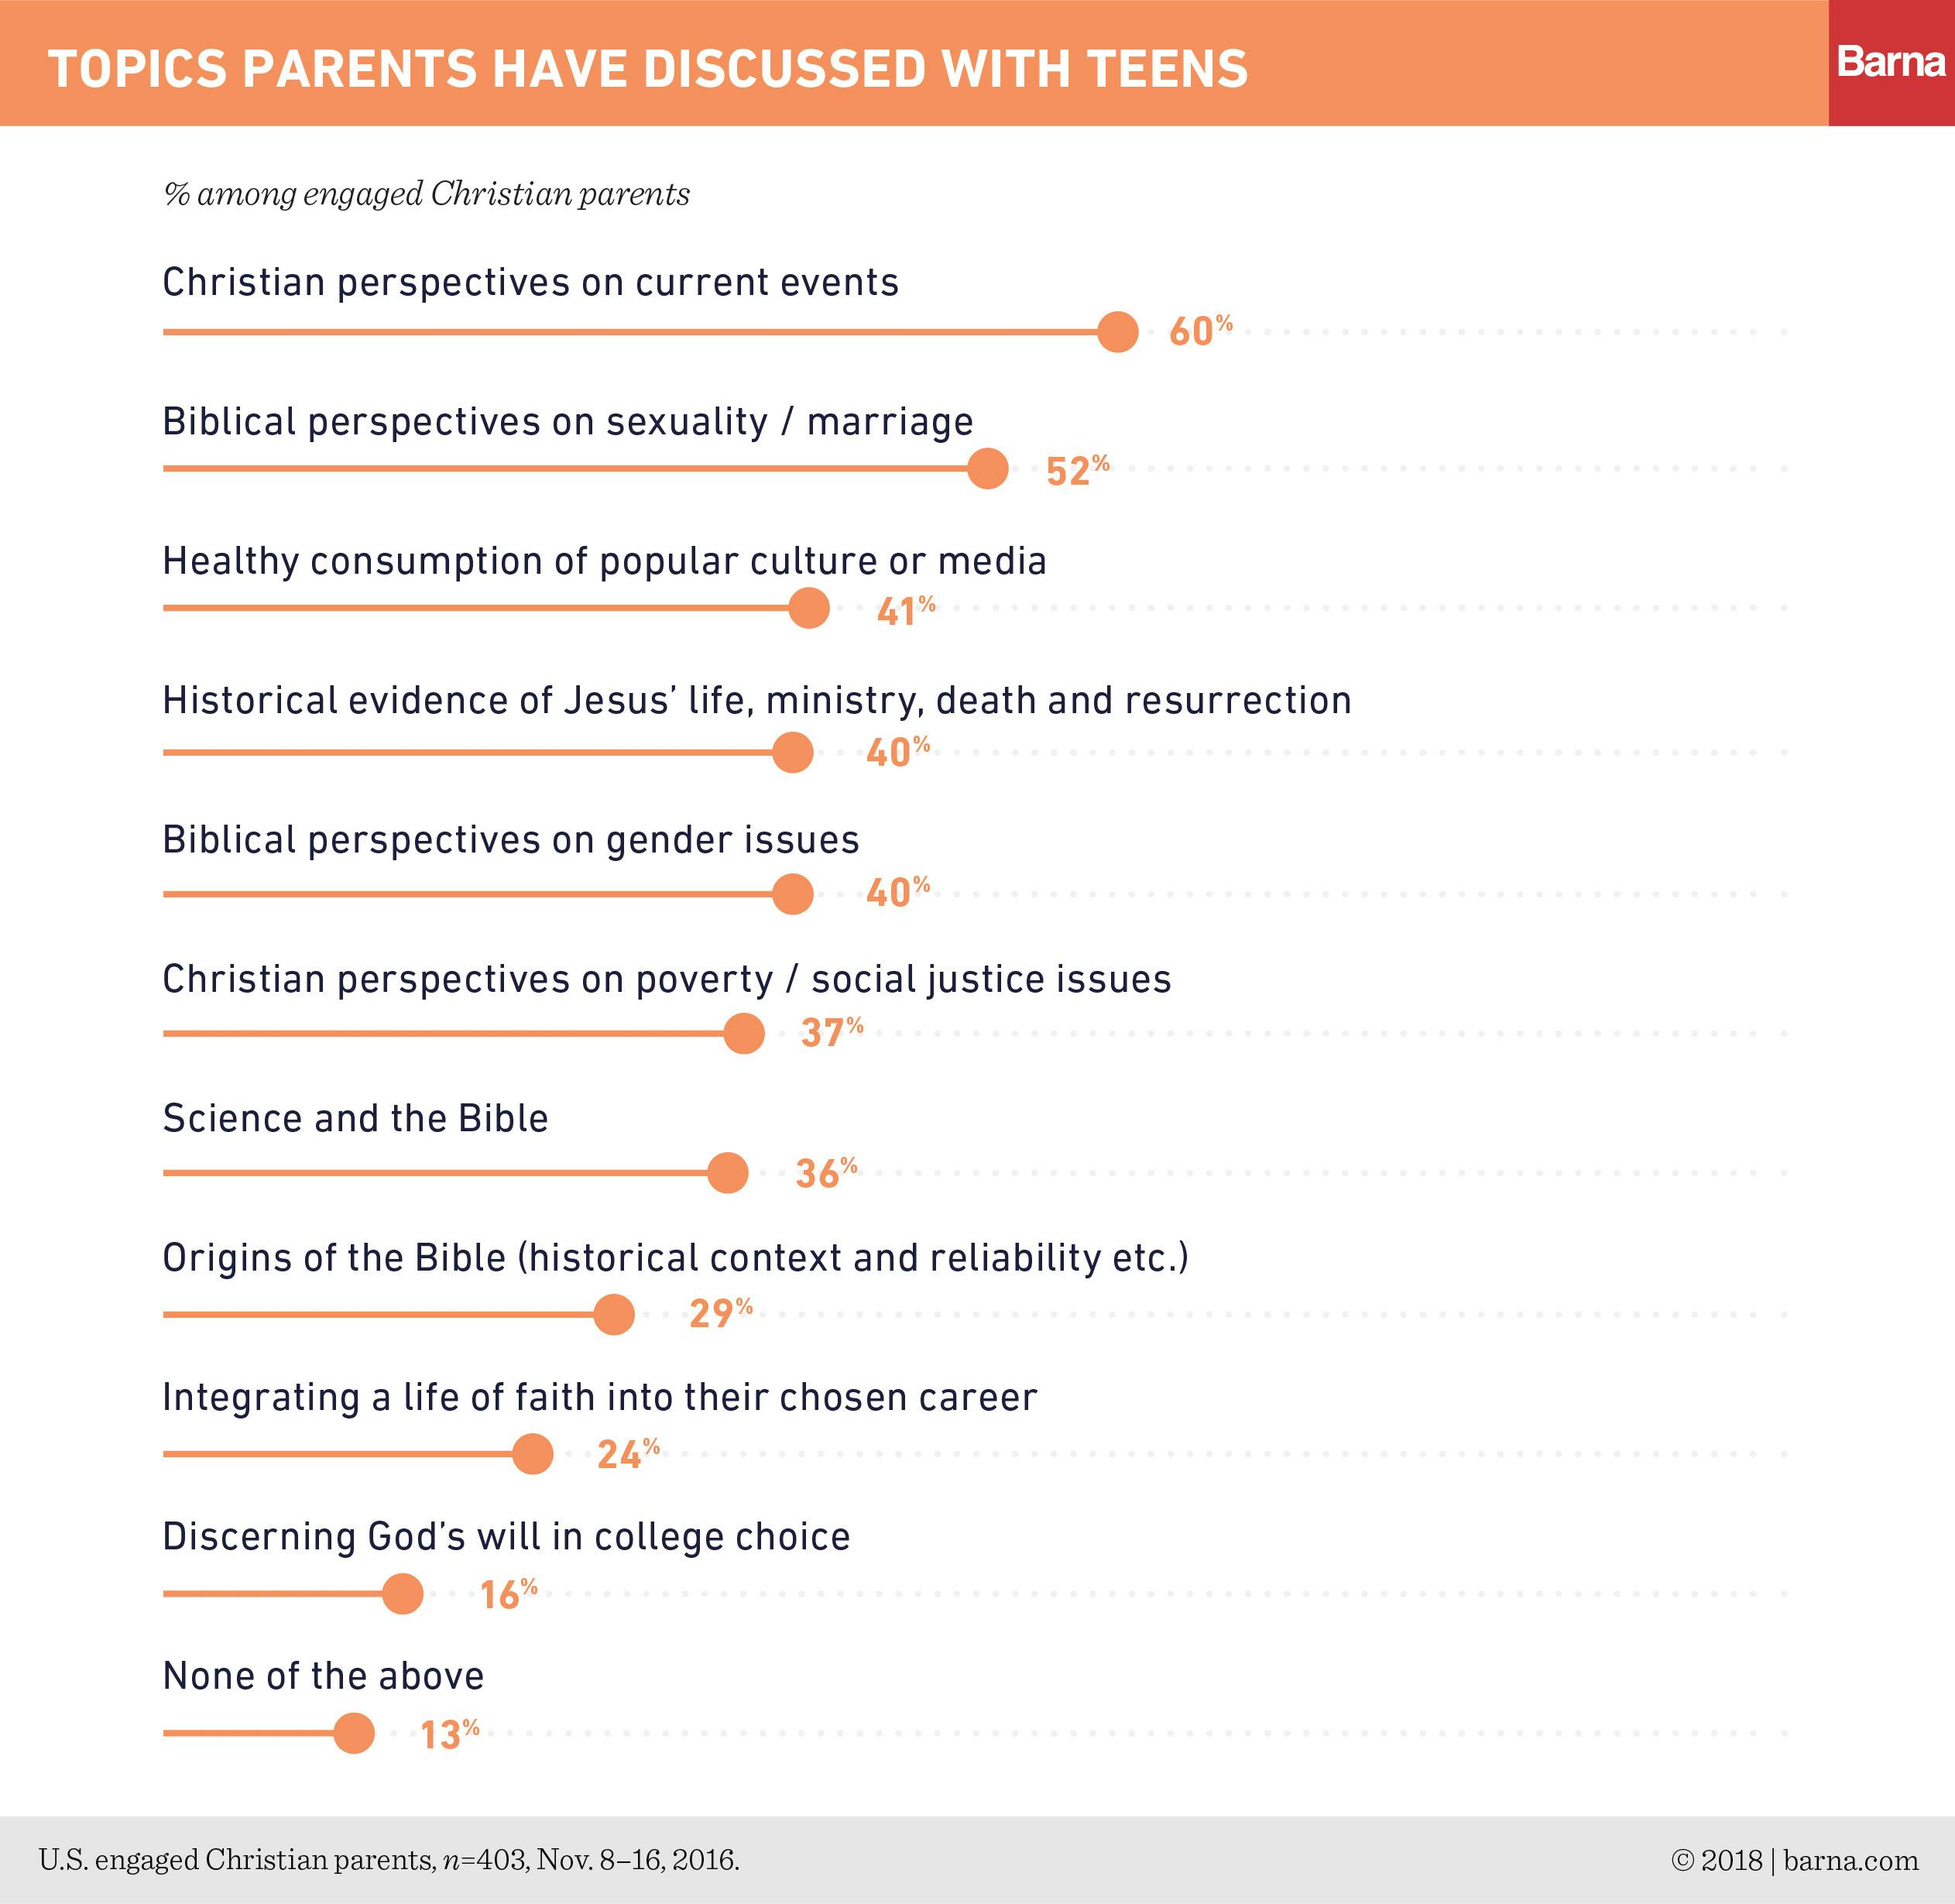 Topics parents discuss with teens